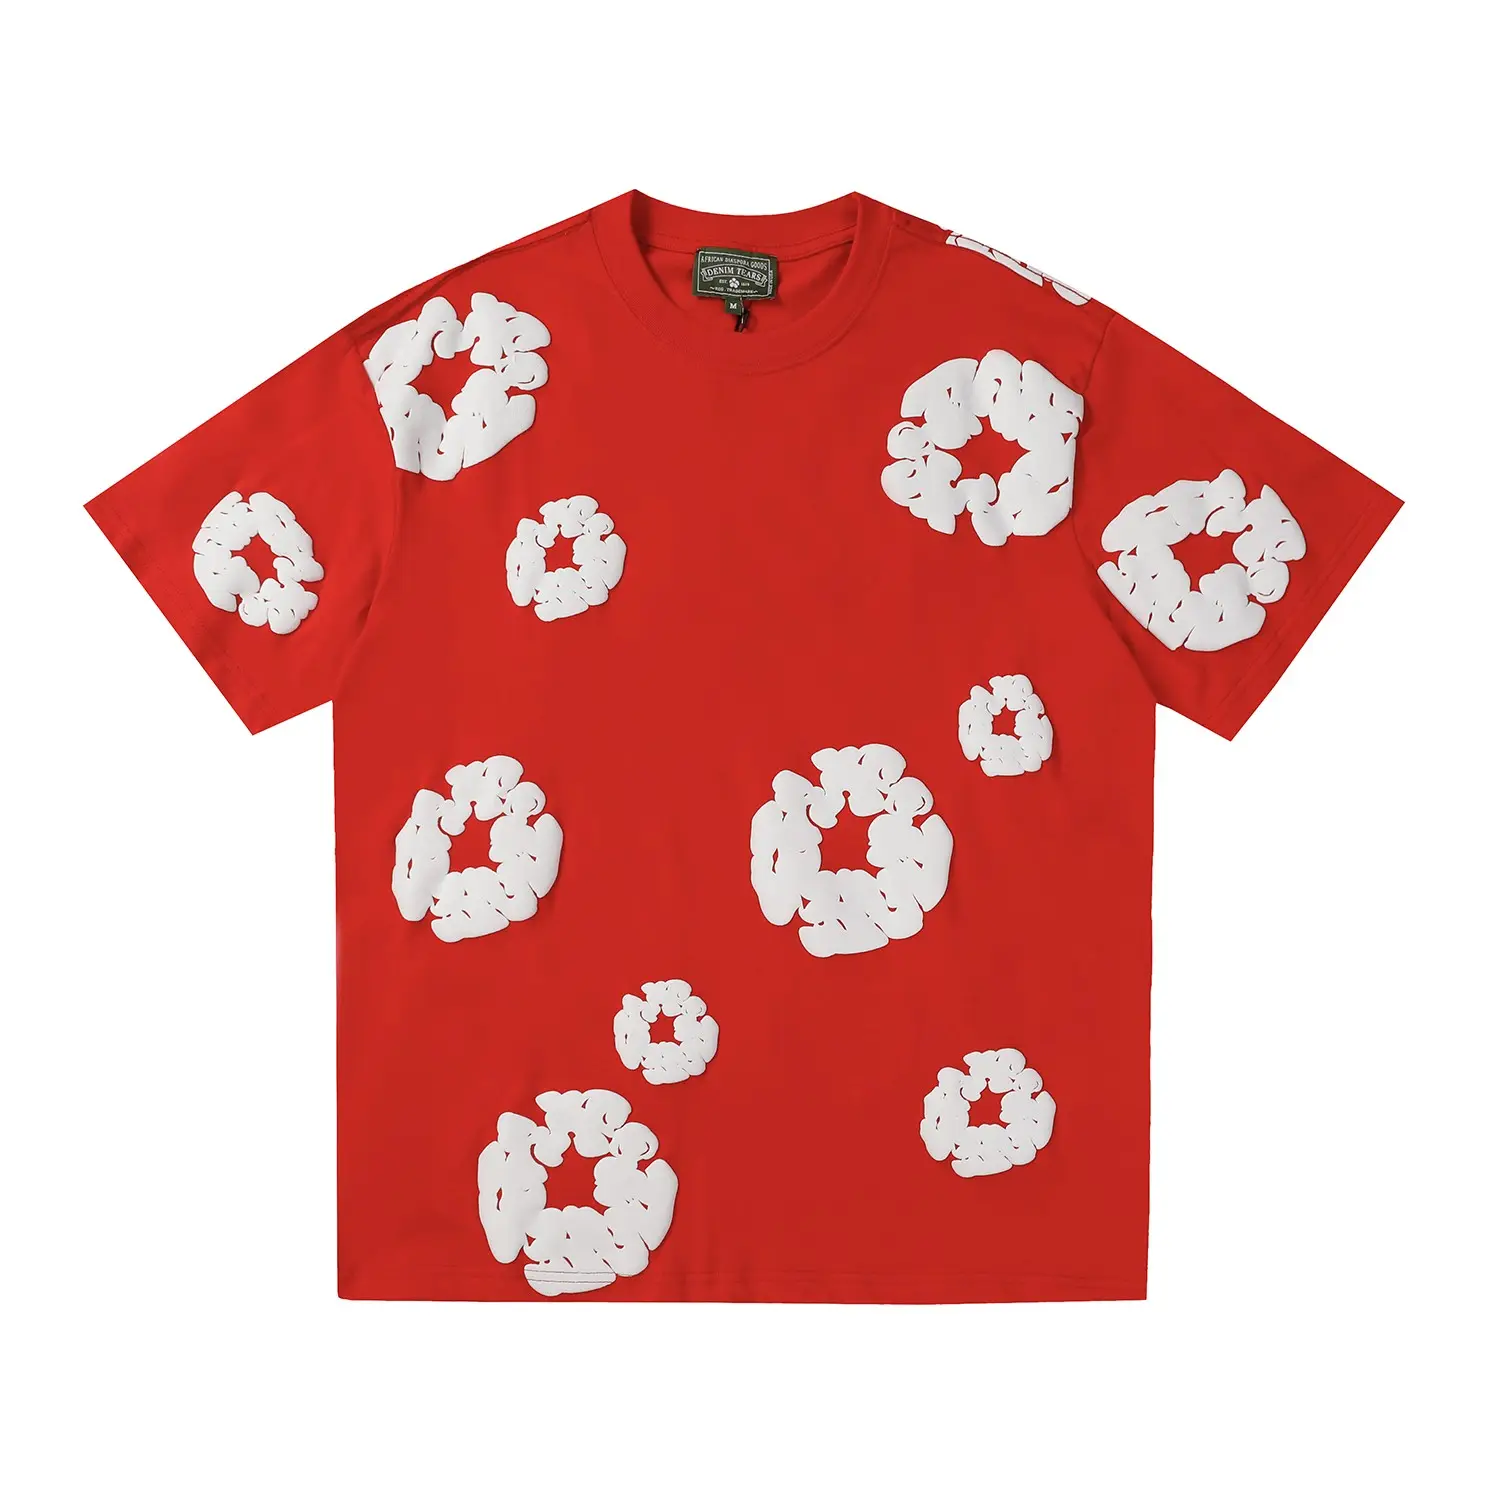 Denim tea Red men's women's t shirt for men man's clothing heavyweight streetwear cotton graphic vintage puff print t-shirt